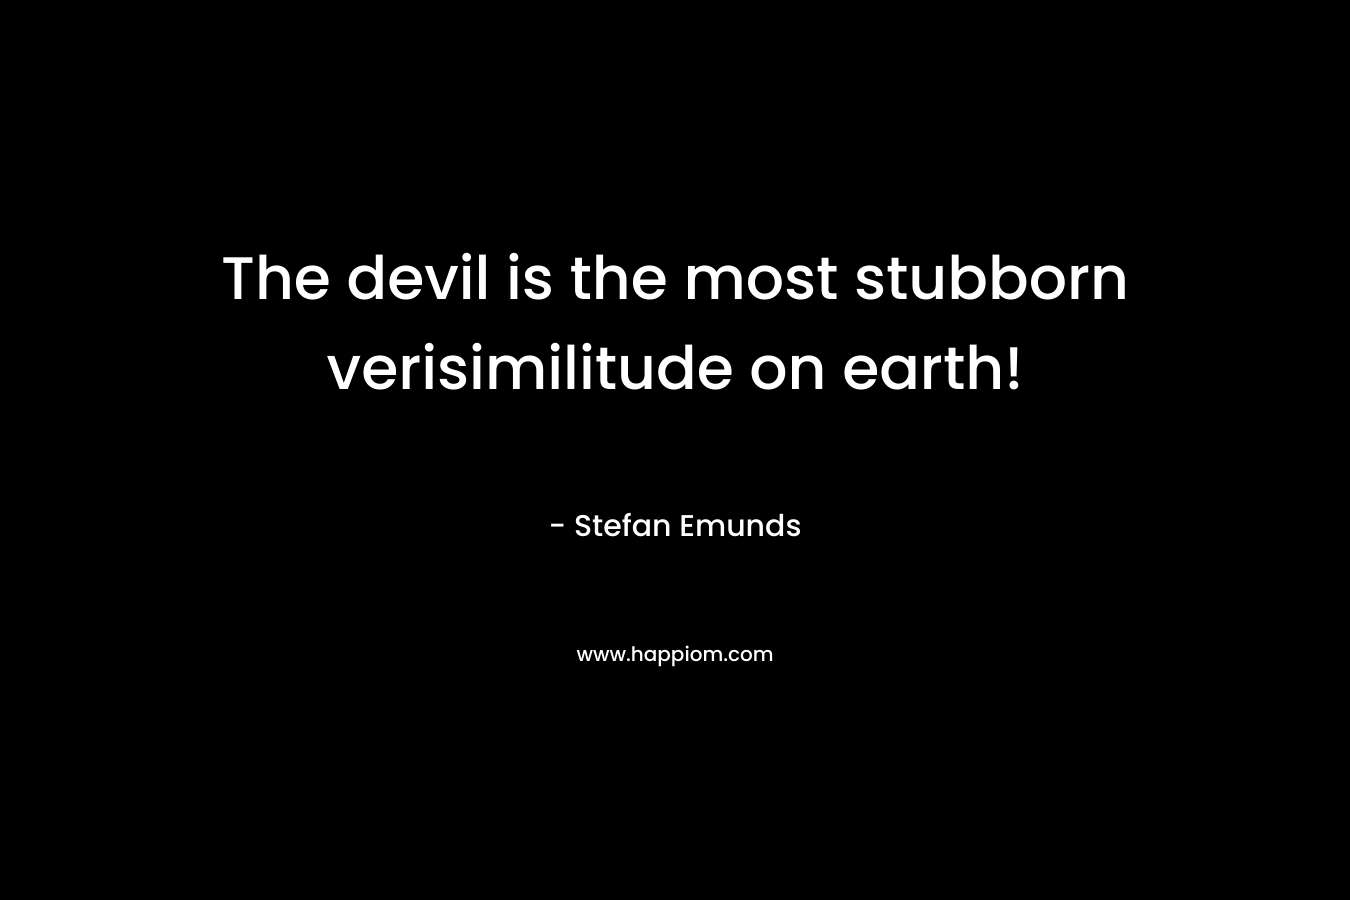 The devil is the most stubborn verisimilitude on earth!